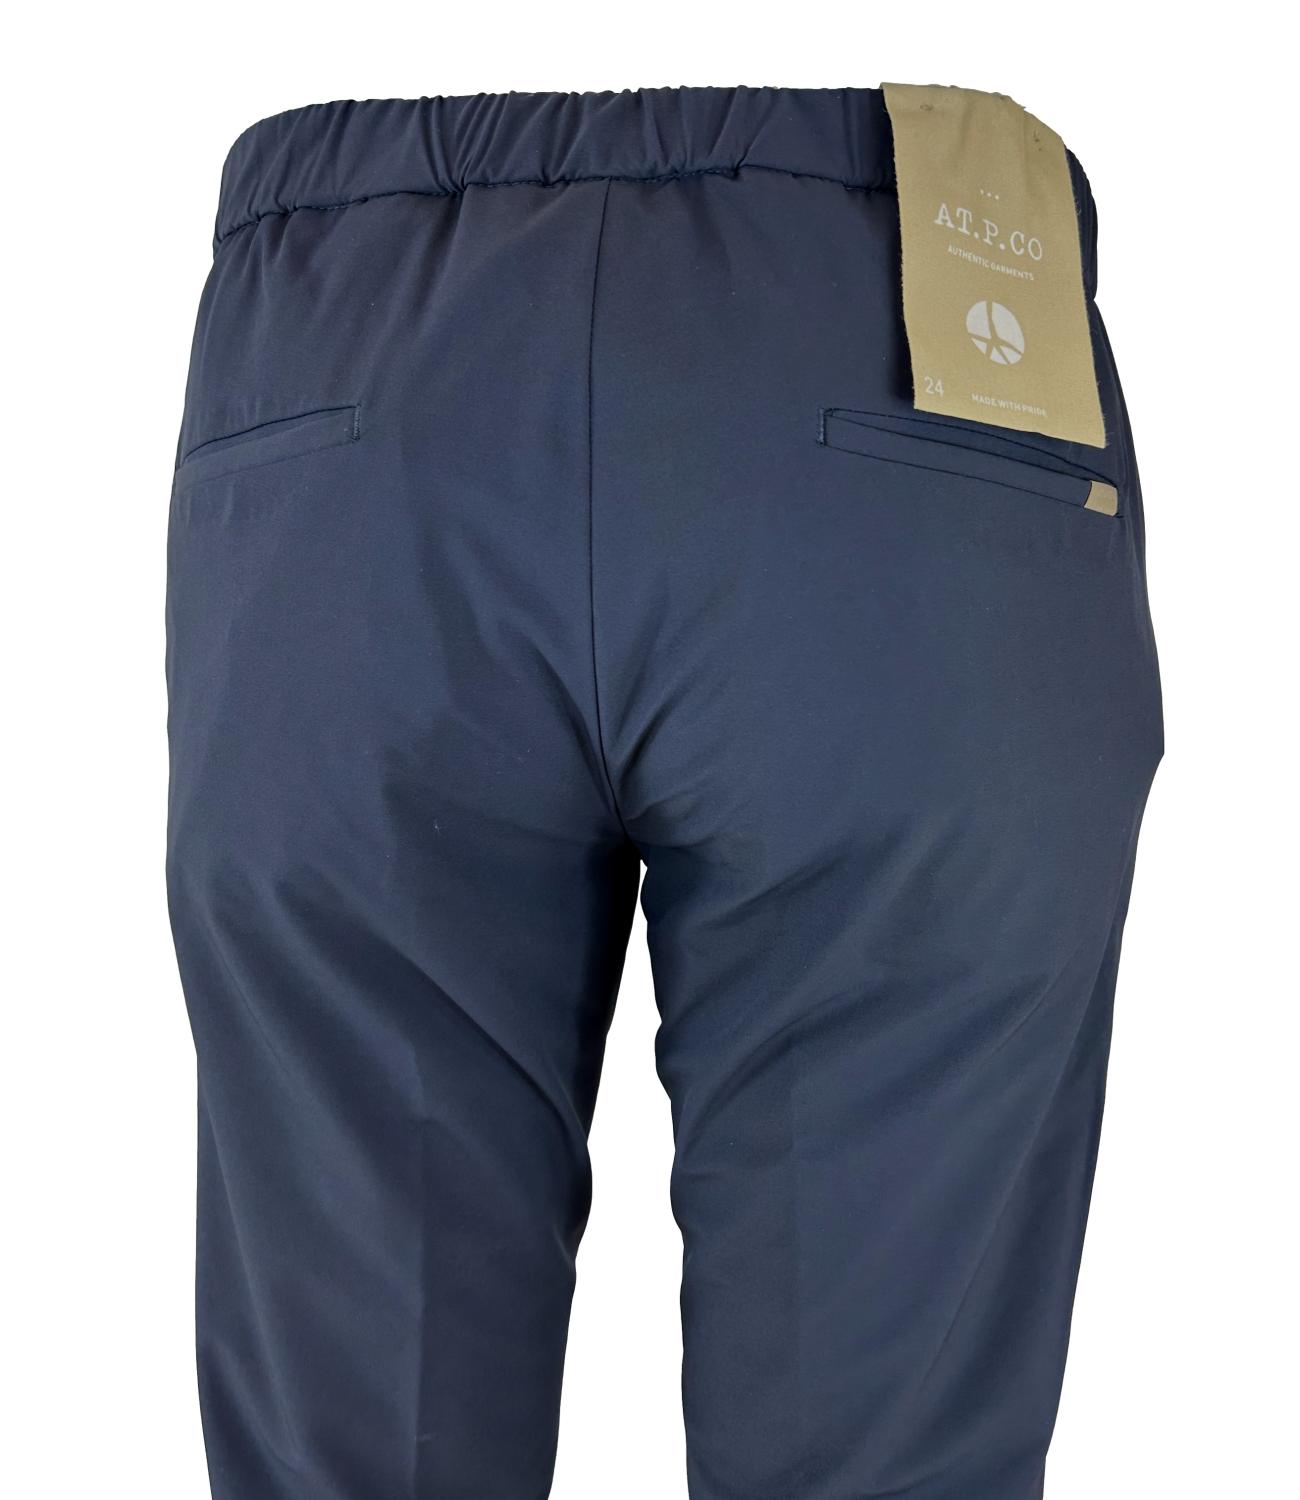 Pantalone AT.P.CO. blu navy uomo in tessuto tecnico